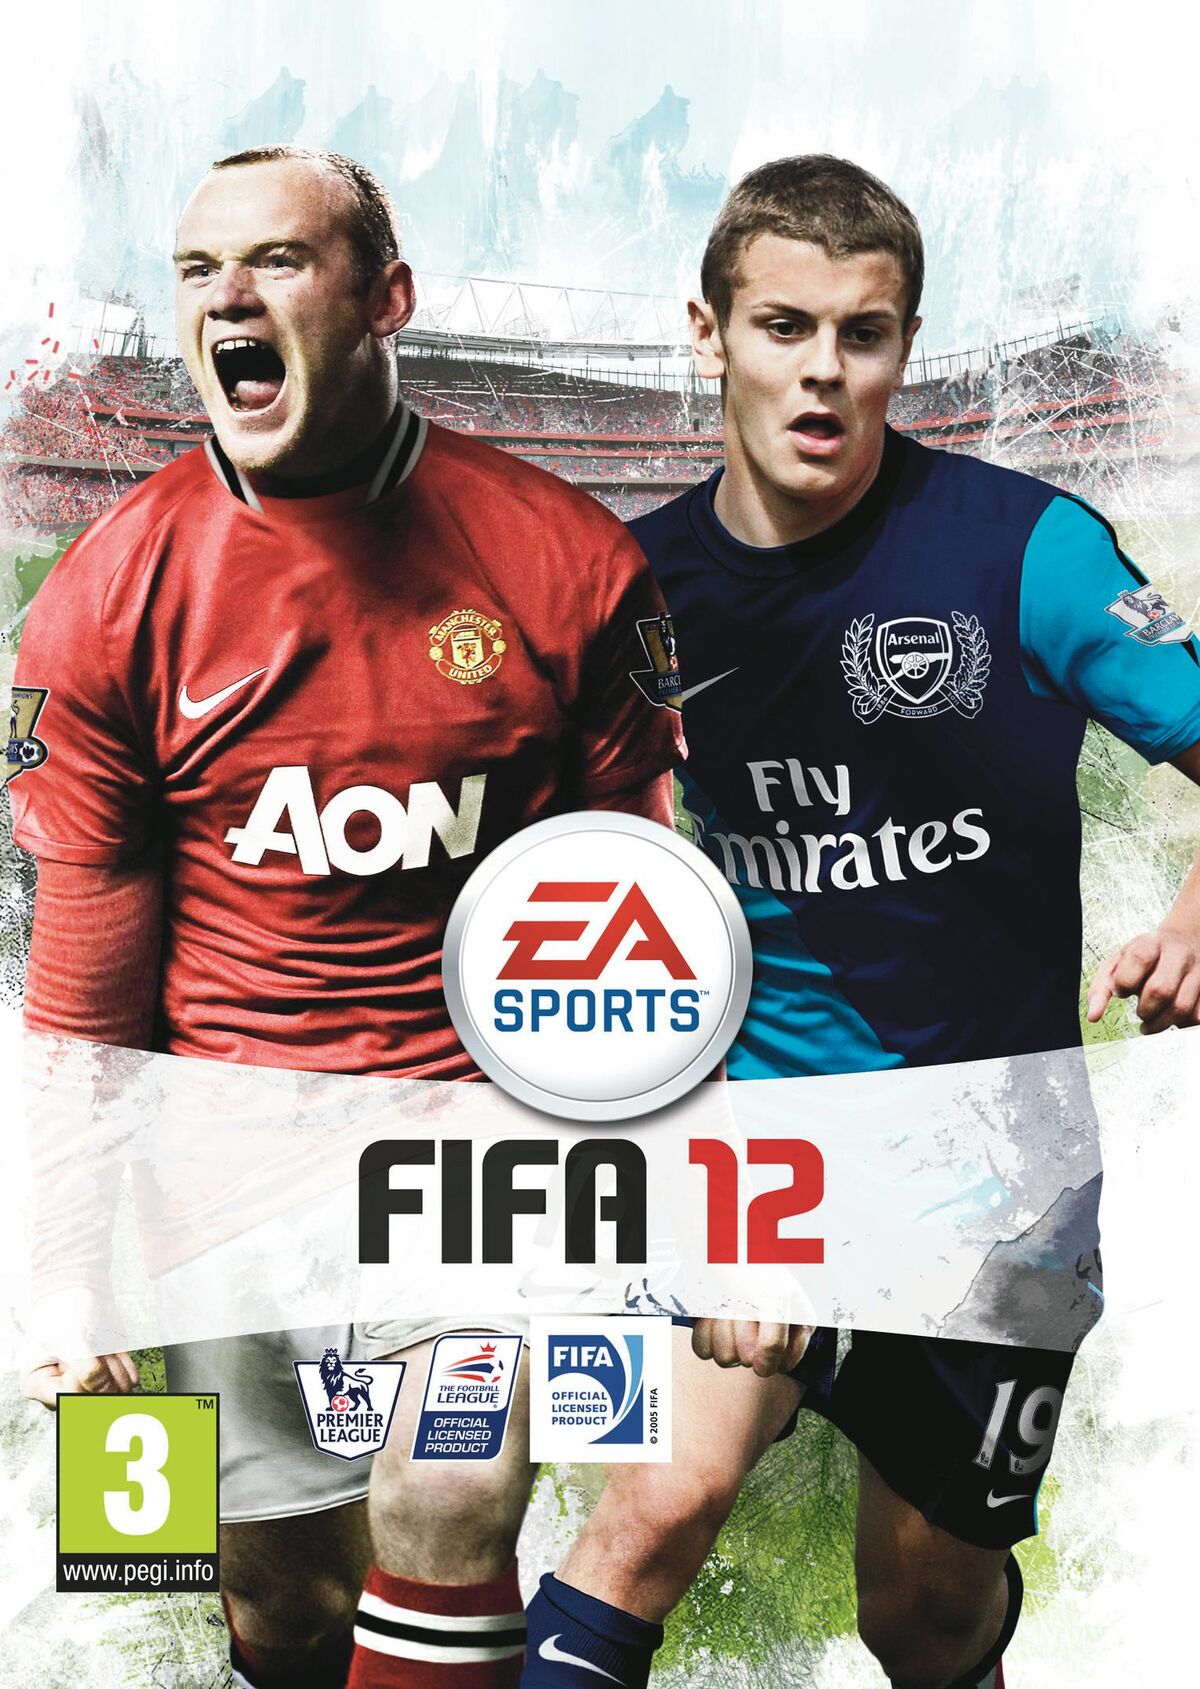 FIFA 22 PS3 Vs FIFA MOBILE 22 Android 